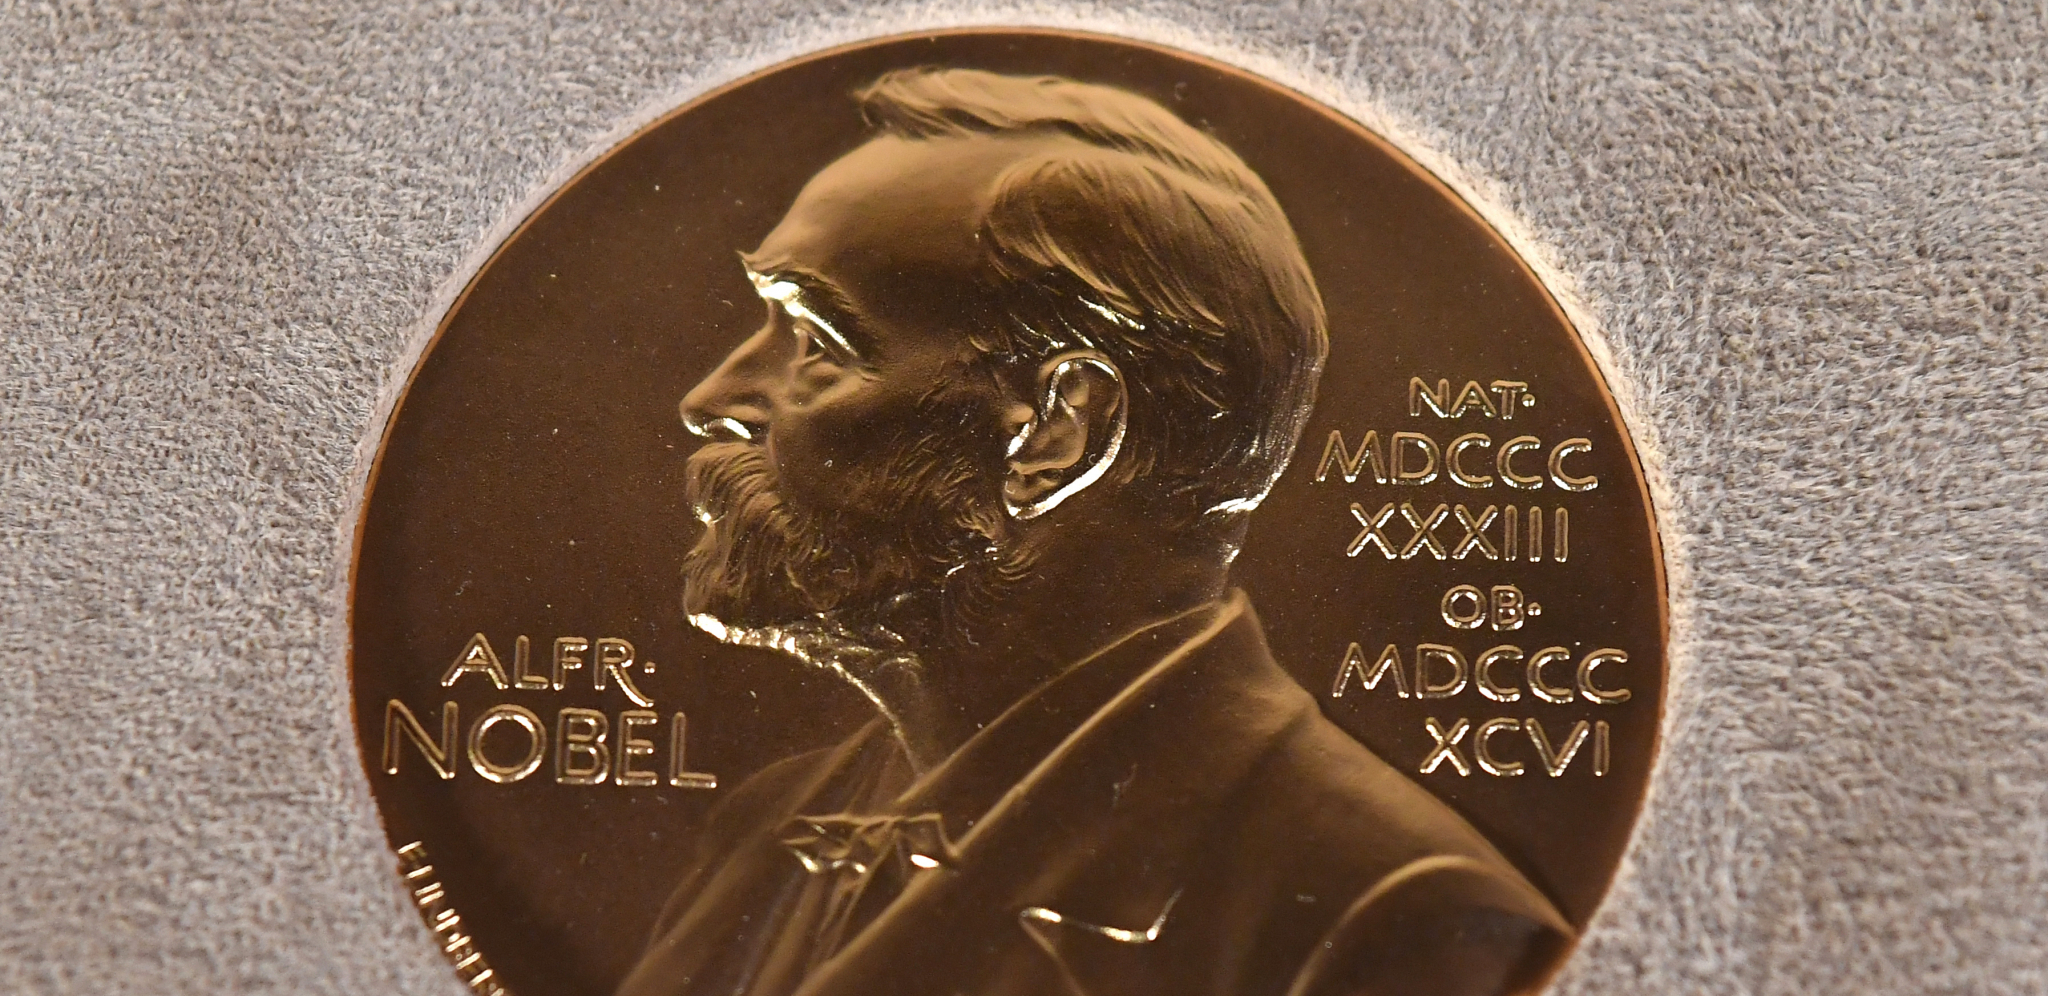 DODELJENO NAJVEĆE PRIZNANJE IZ KNJIŽEVNOSTI Pet favorita za Nobelovu nagradu, a evo ko je počasni dobitnik